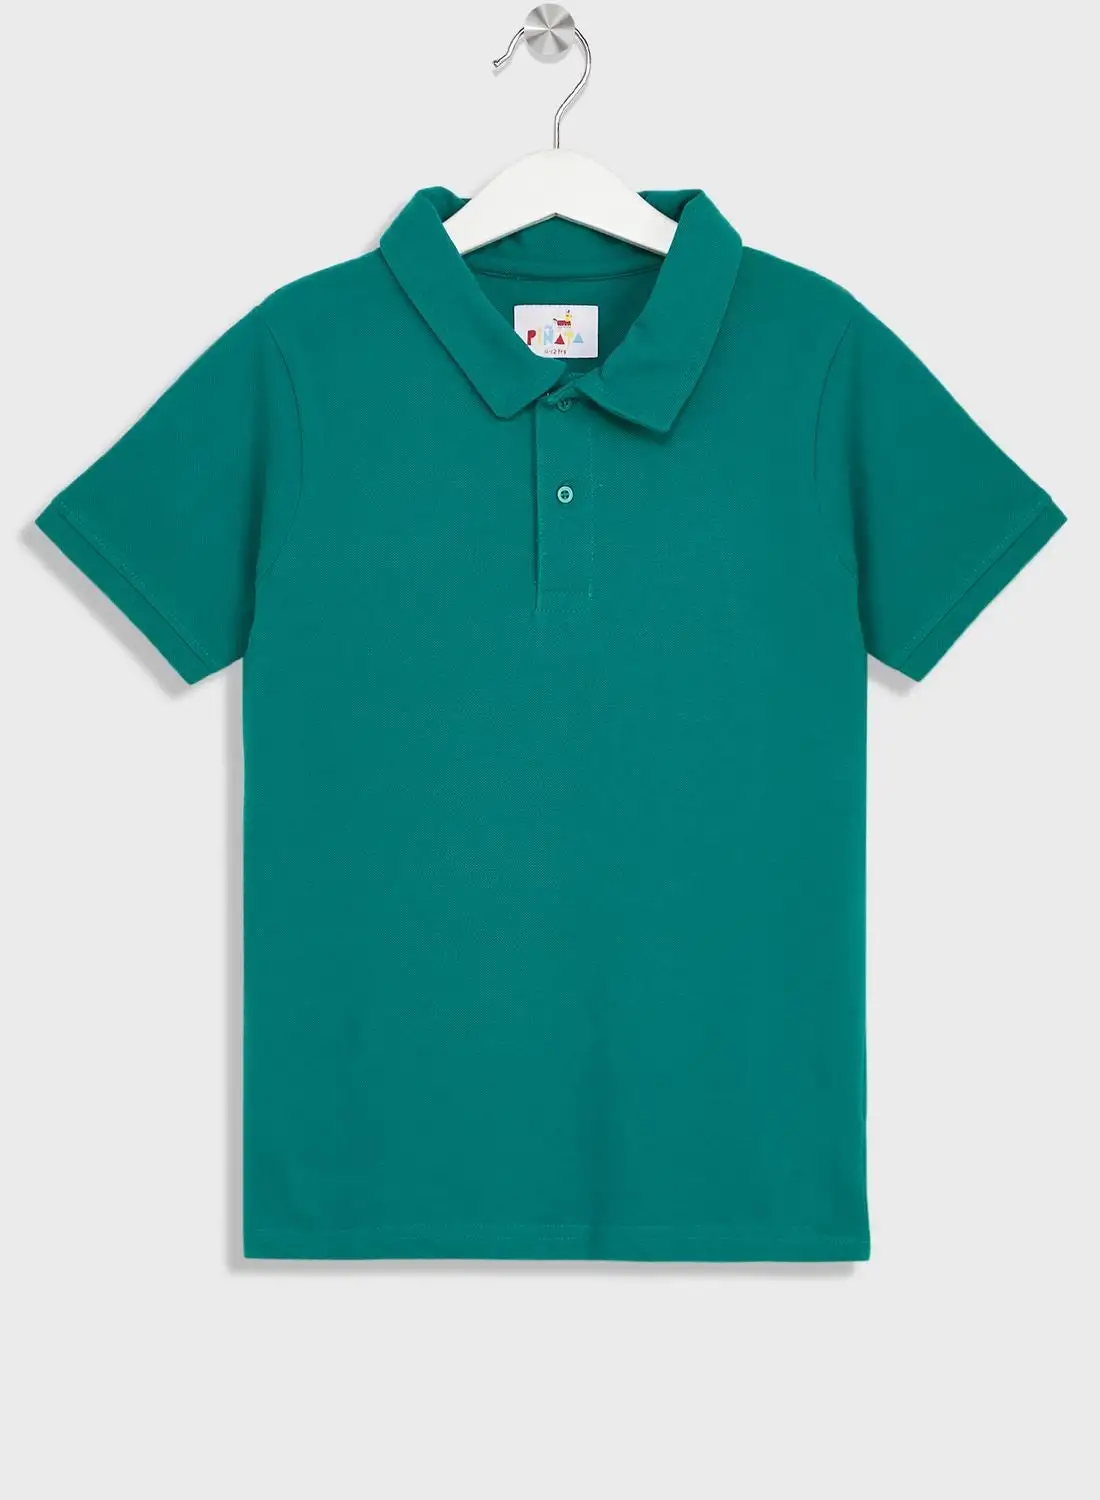 Pinata Boys Essential Polo T-Shirt